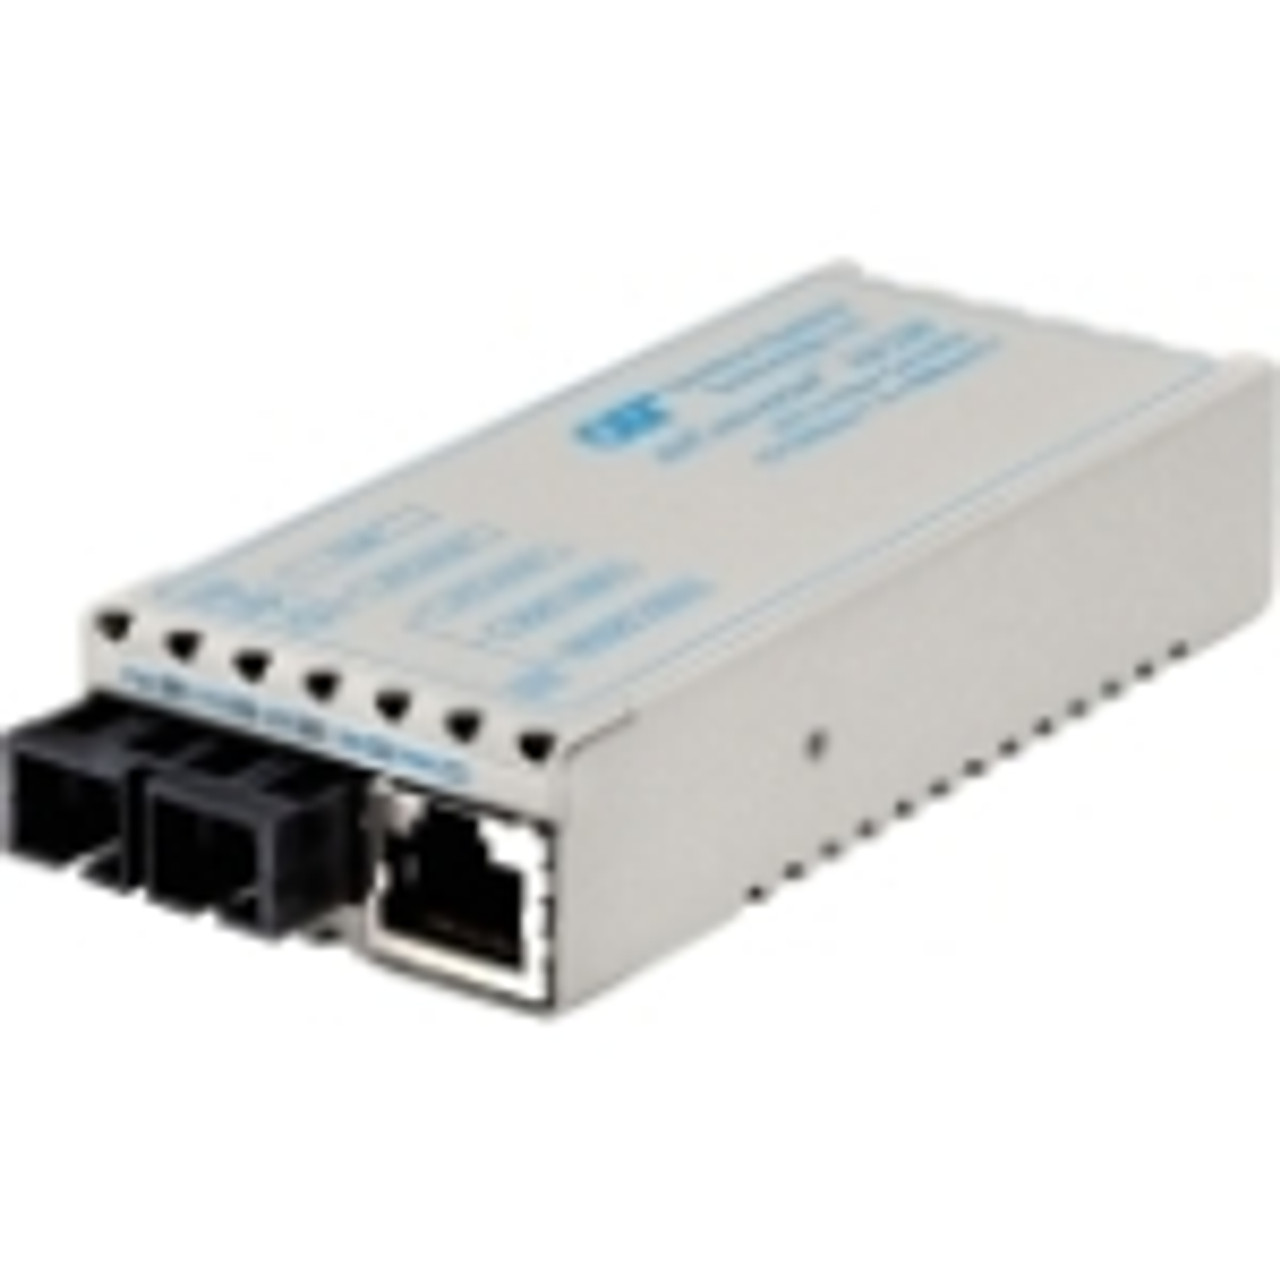 1122-0-6 miConverter 10/100 Plus Ethernet Fiber Media Converter RJ45 SC Multimode 5km 1 x 10/100BASE-TX, 1 x 100BASE-FX, USB Powered,